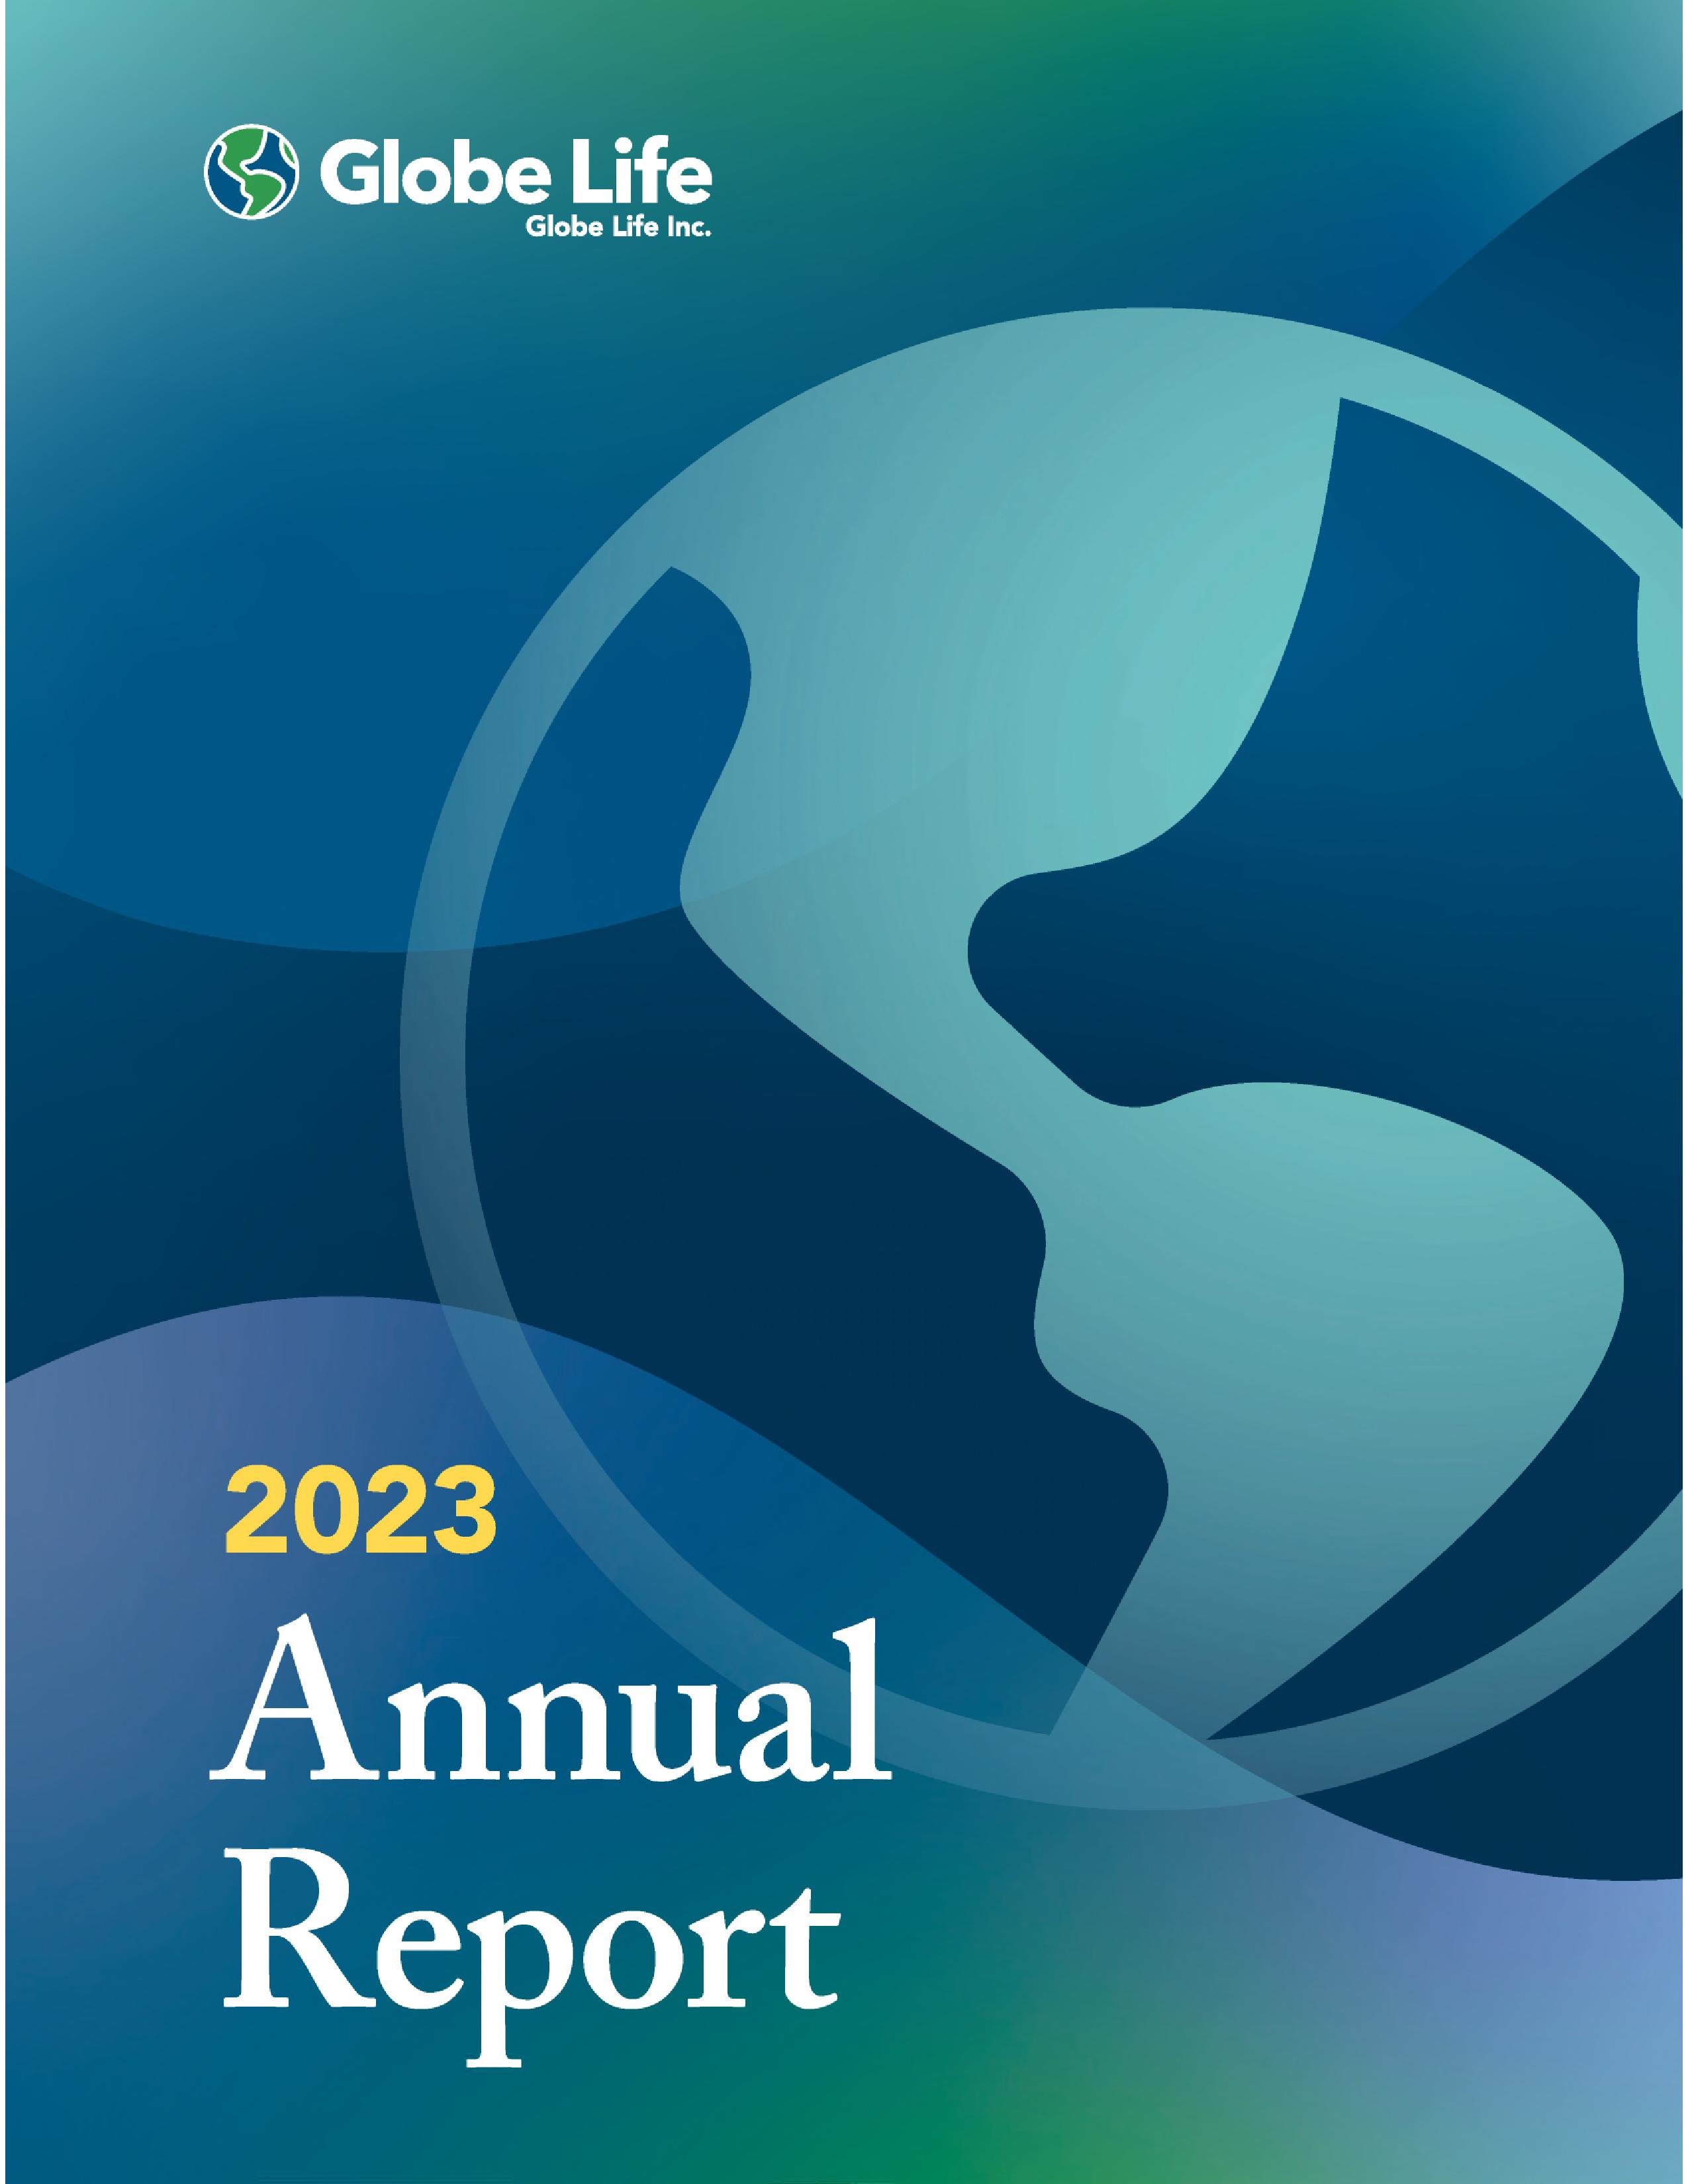 Annual Report Sample Image